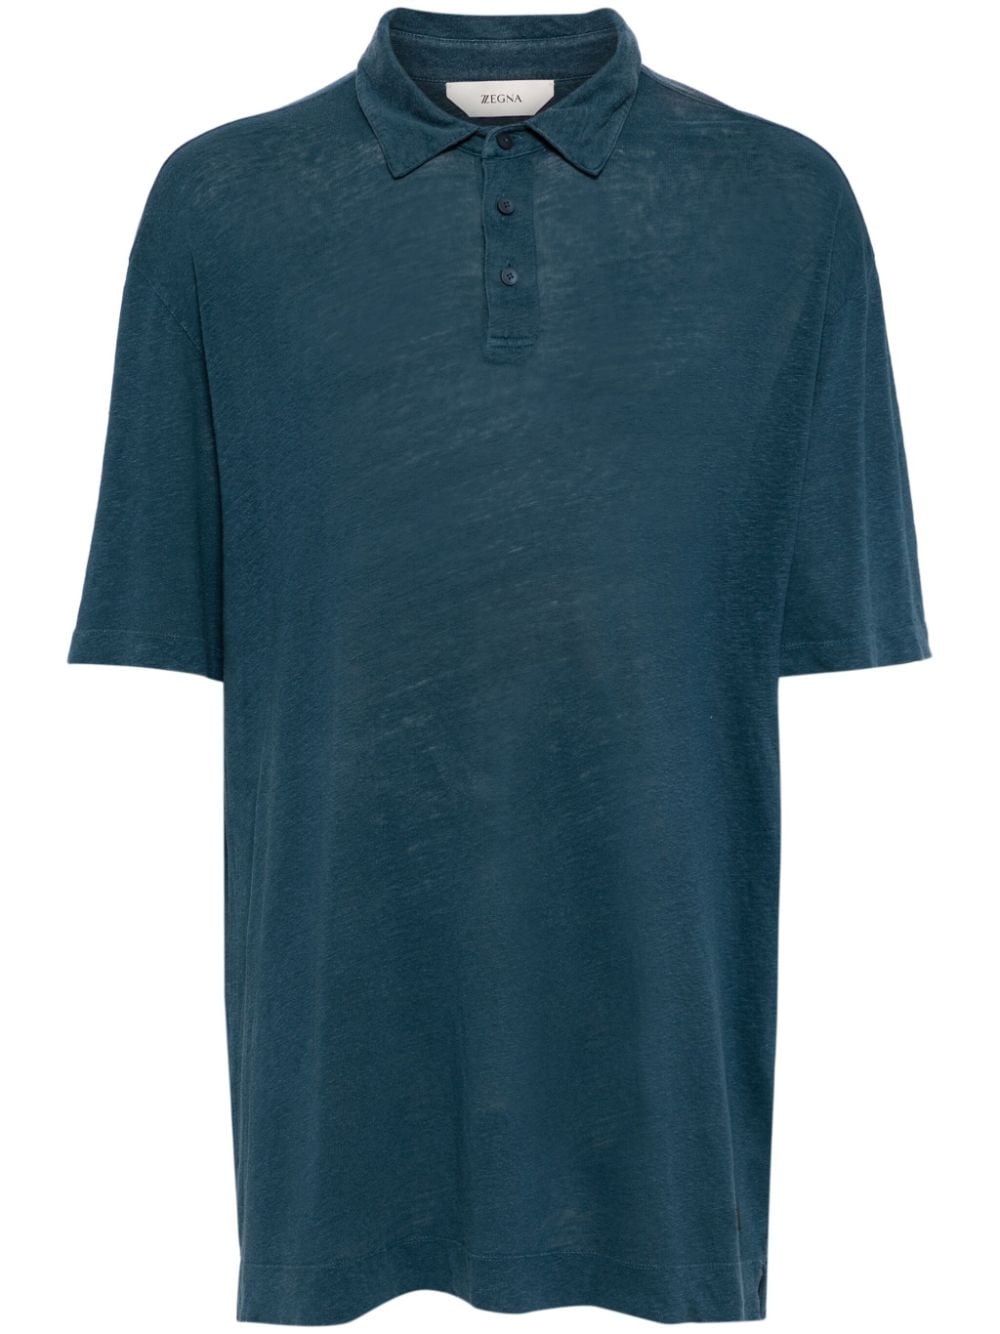 Zegna short-sleeve linen polo shirt - Blau von Zegna